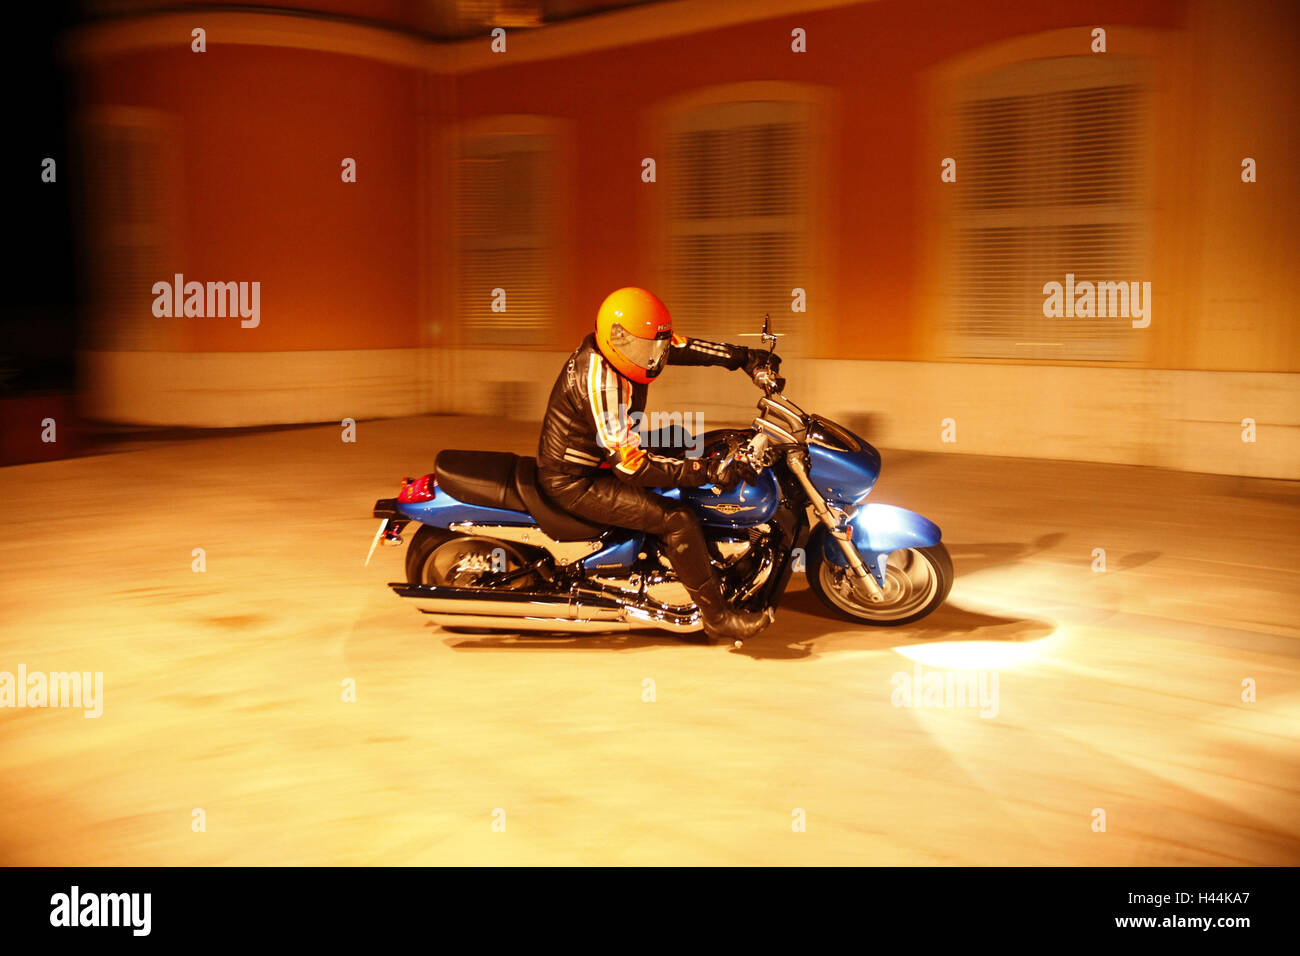 Motorcyclist, Suzuki m 1500 Intruder, night scenery, Stock Photo